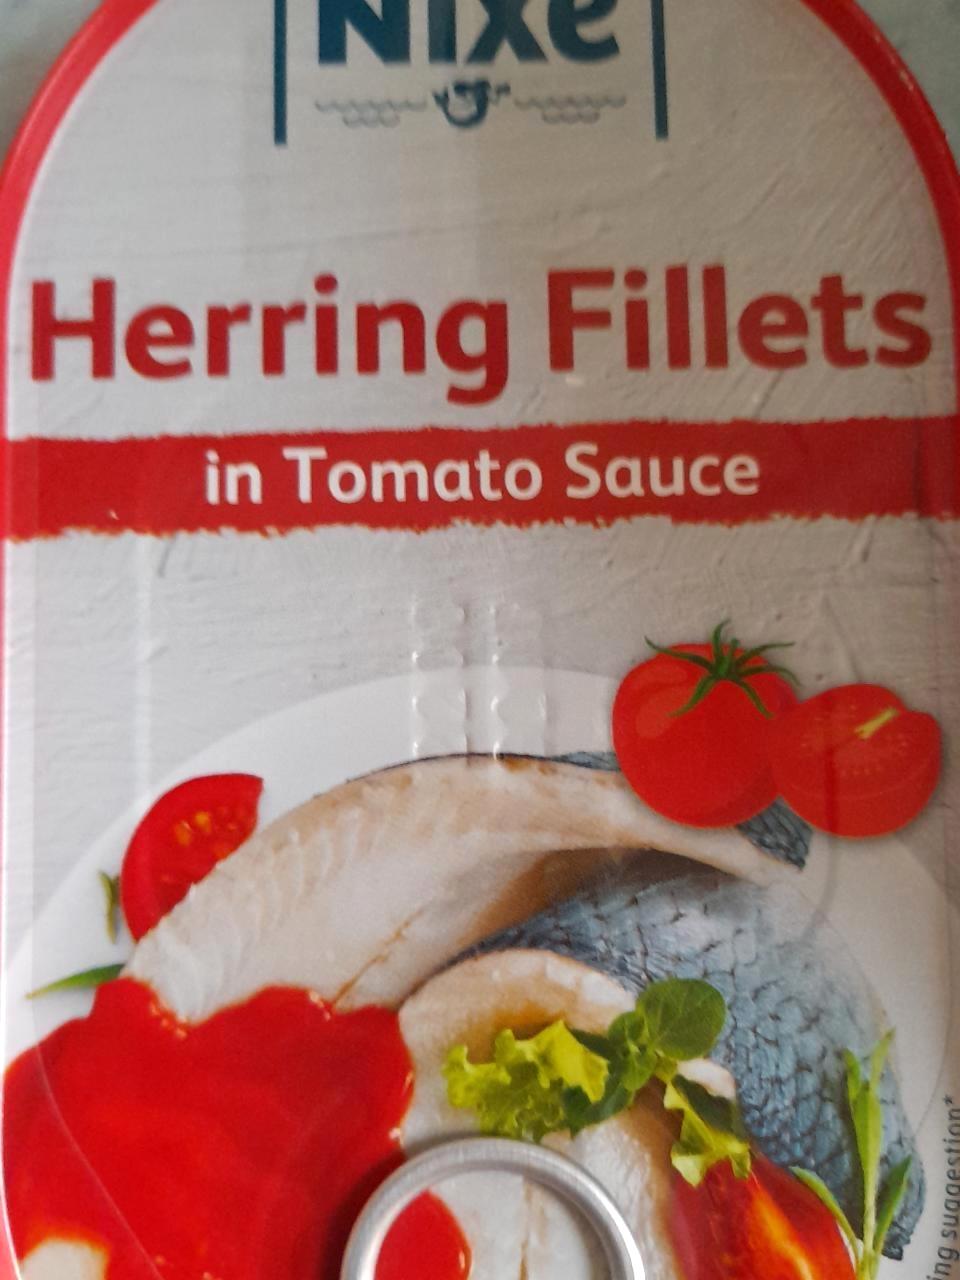 Képek - Herring fillets in tomato sauce Nixe